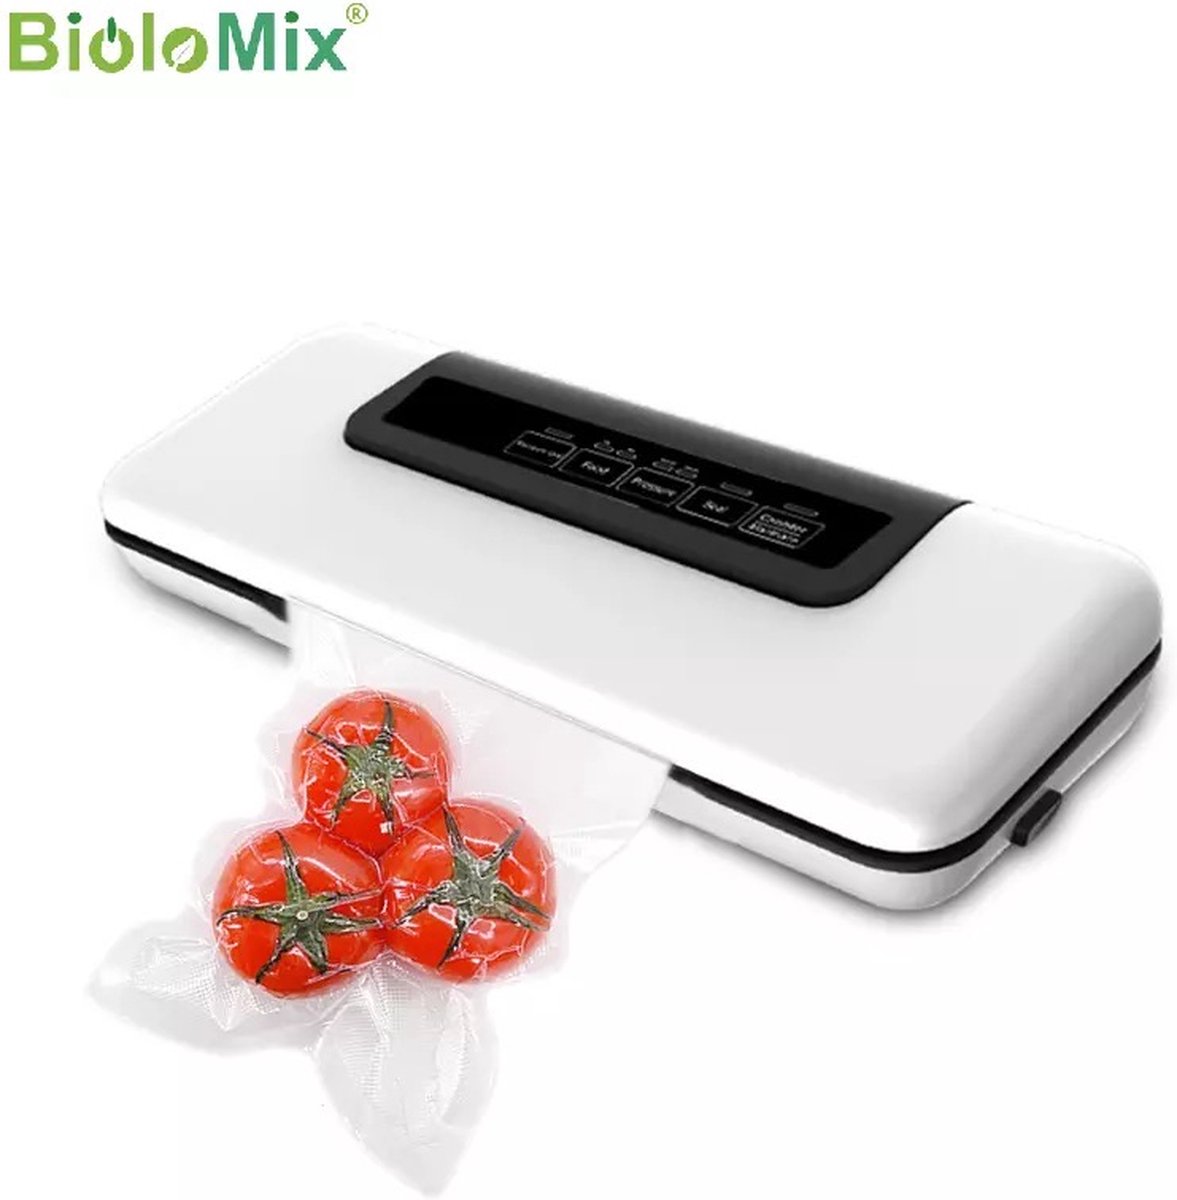 Biolomix® Vacuümmachine - Vacumeermachine - Inclusief Vacuümzakken